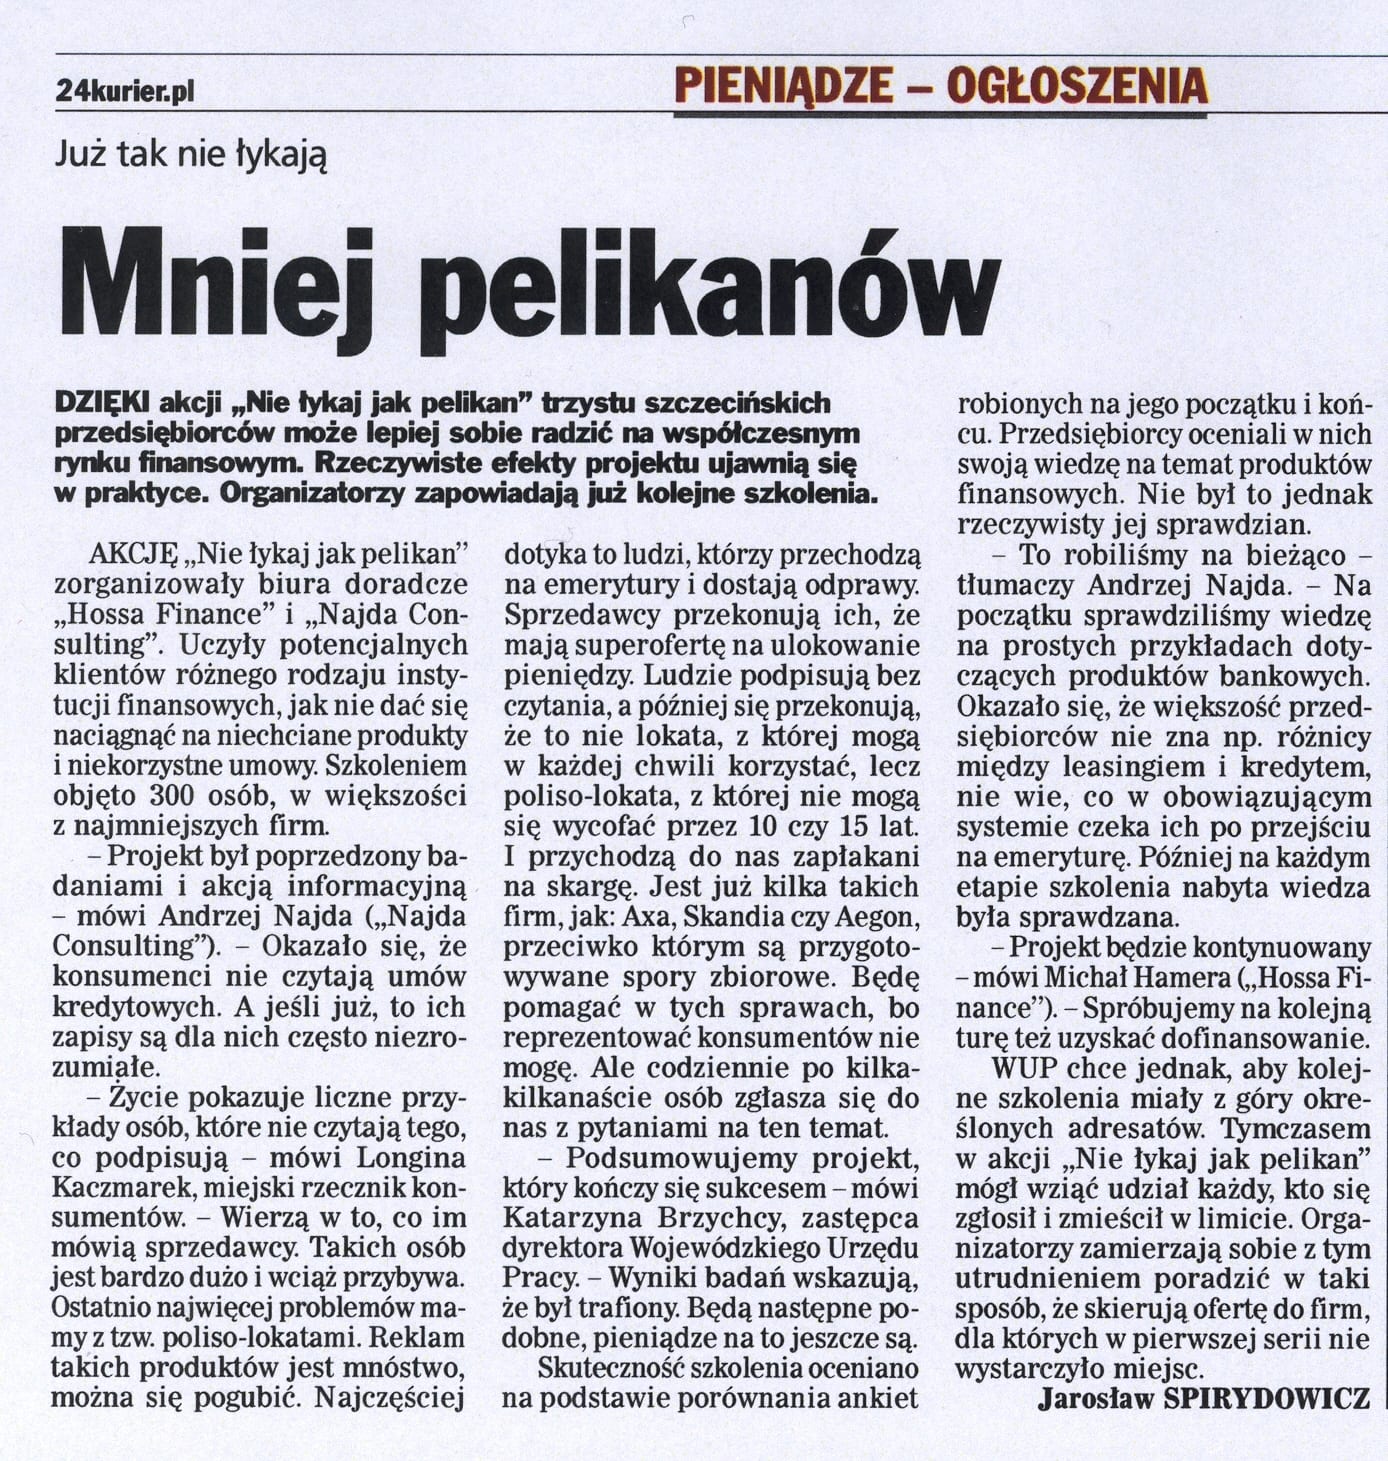 „Mniej pelikanów” – 24kurier.pl